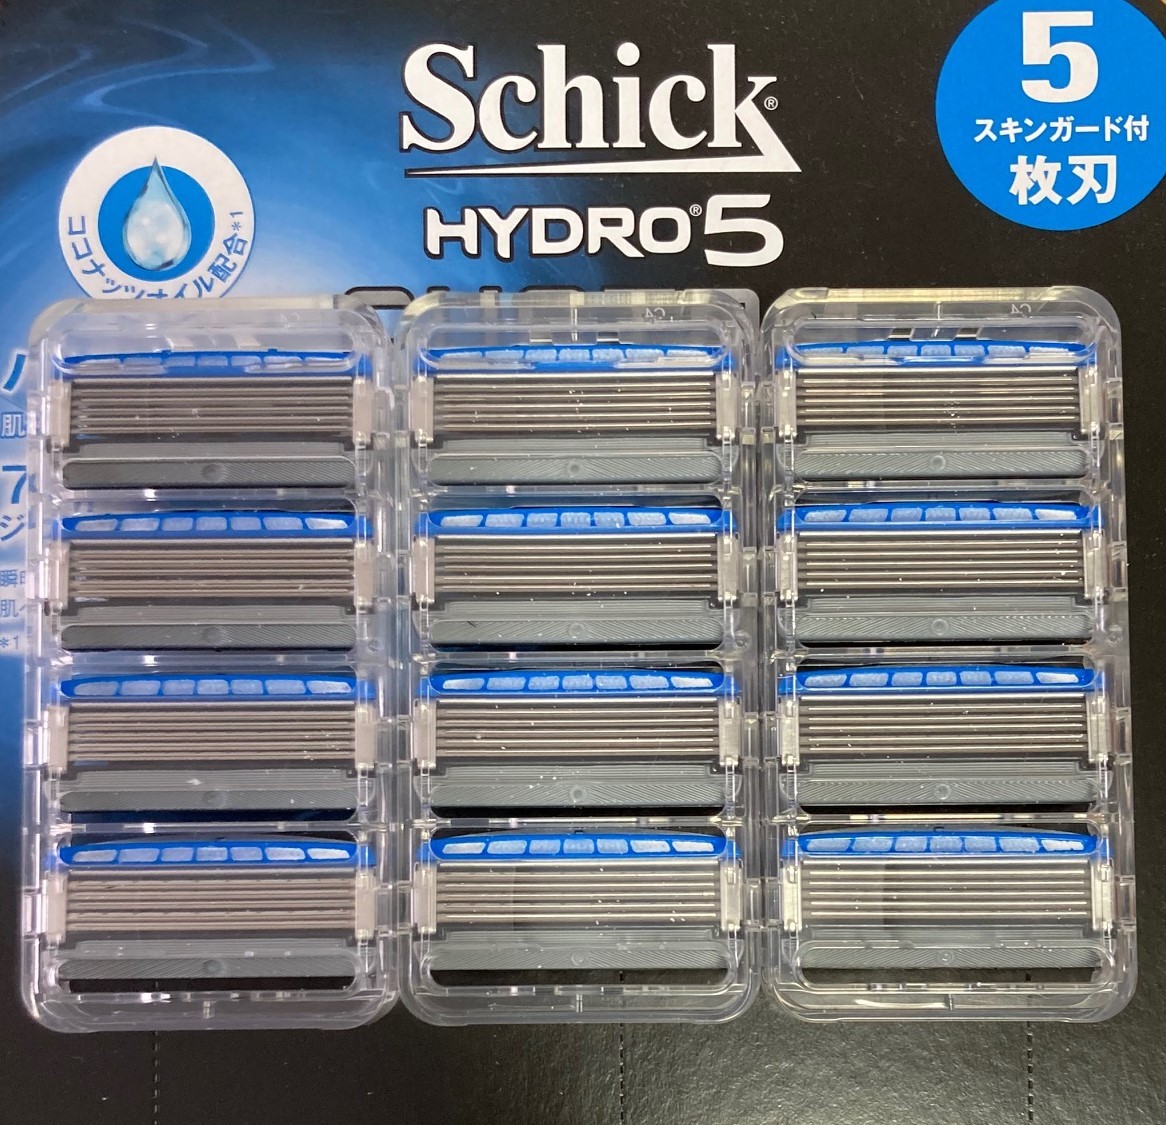 * postage 140~schick HYDRO5 CUSTOM [ Schic hydro 5 custom ] razor 12 piece . sheets blade men's hair removal ...